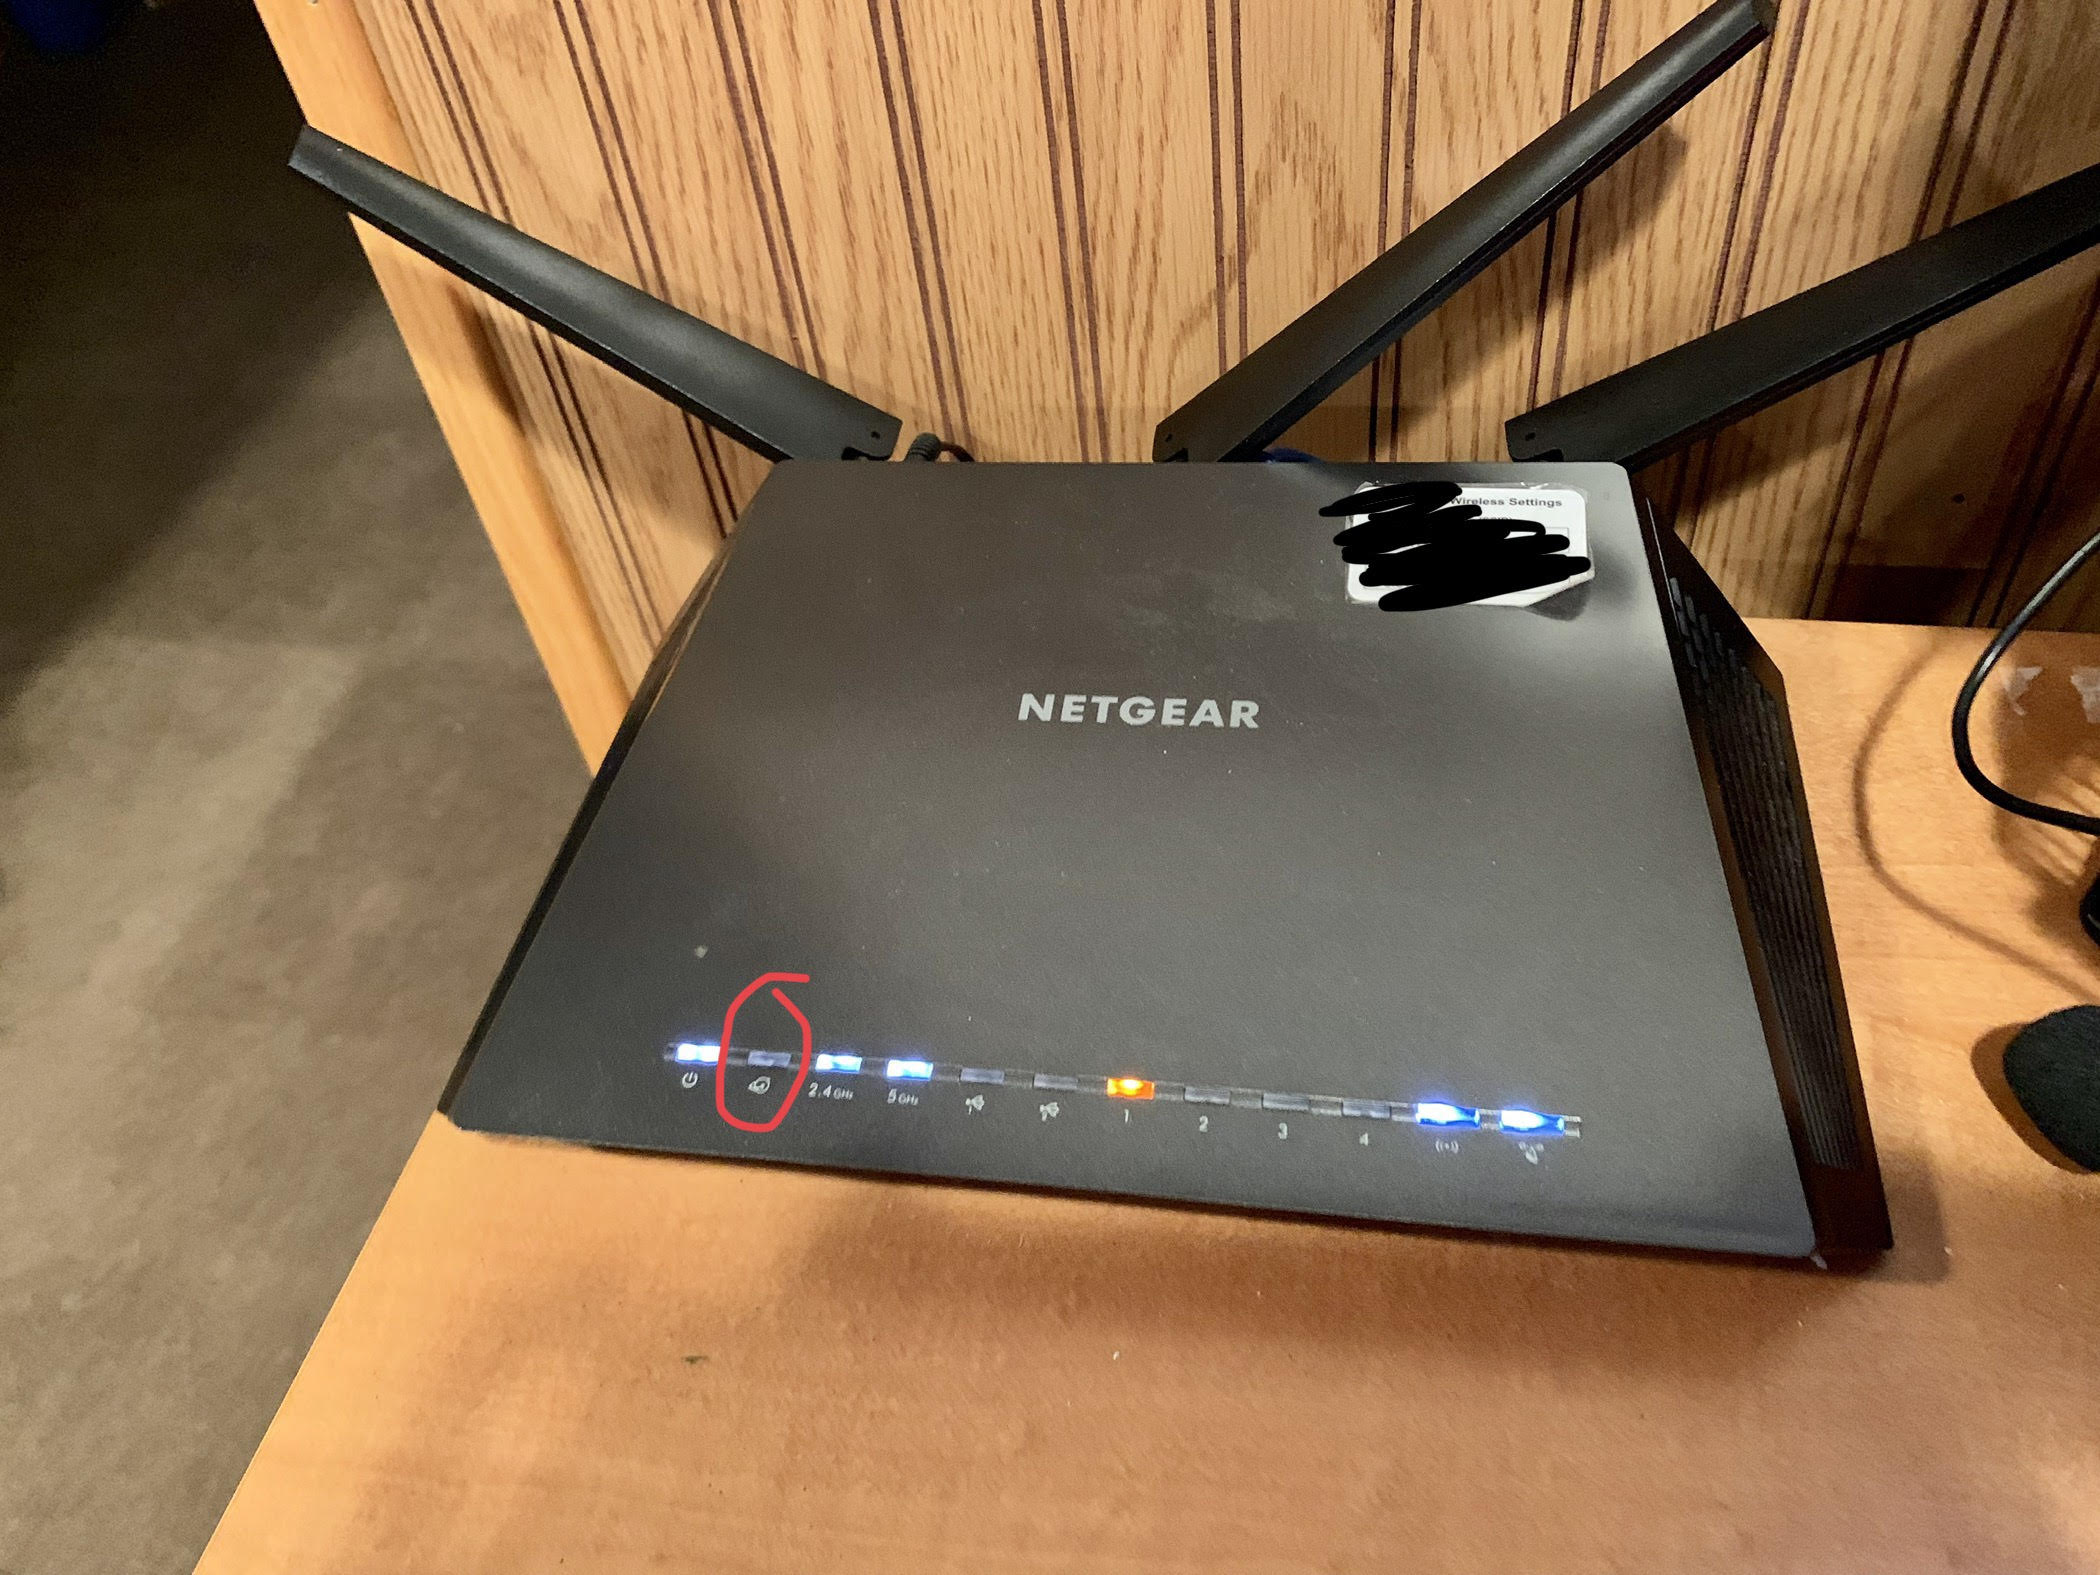 Router won't connect to modem - NETGEAR Communities